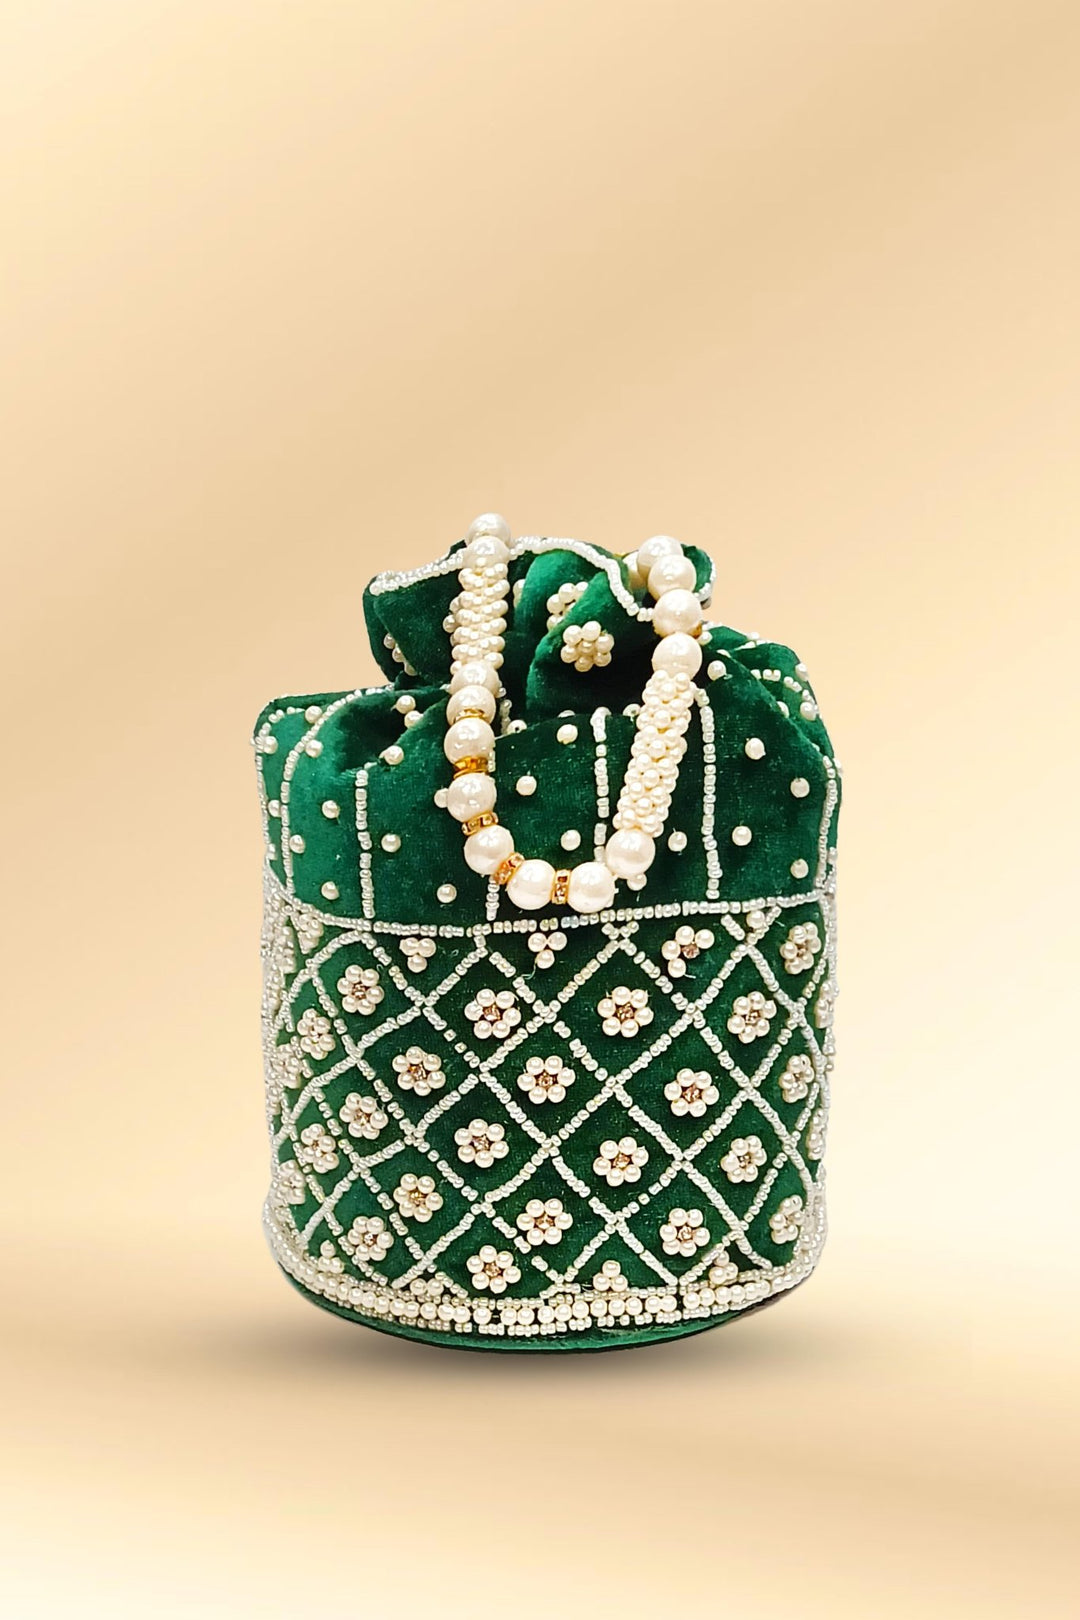 green potli bag